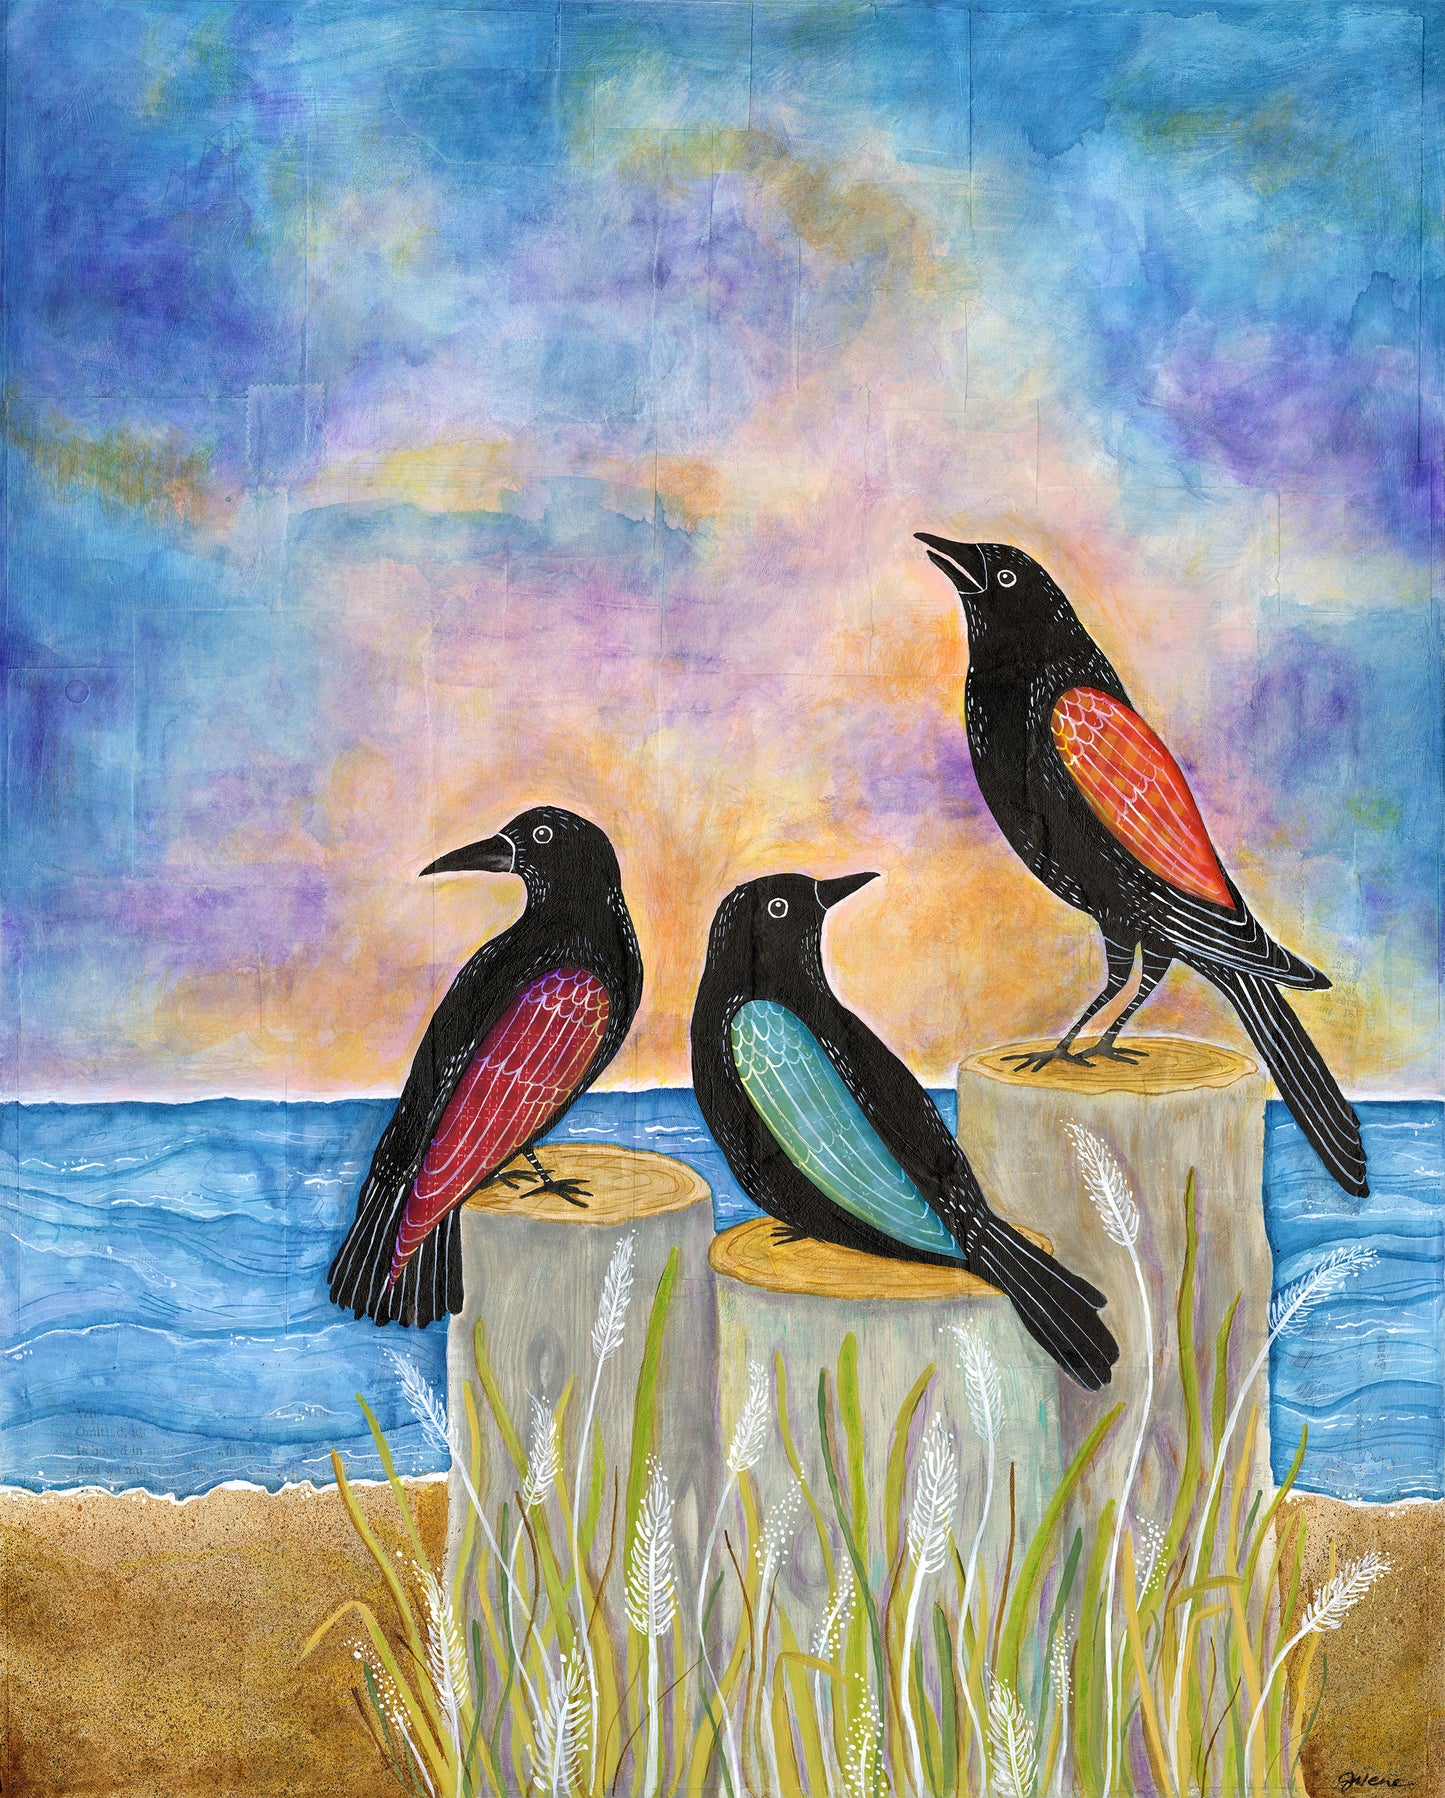 Three Crows at Sunset - Print